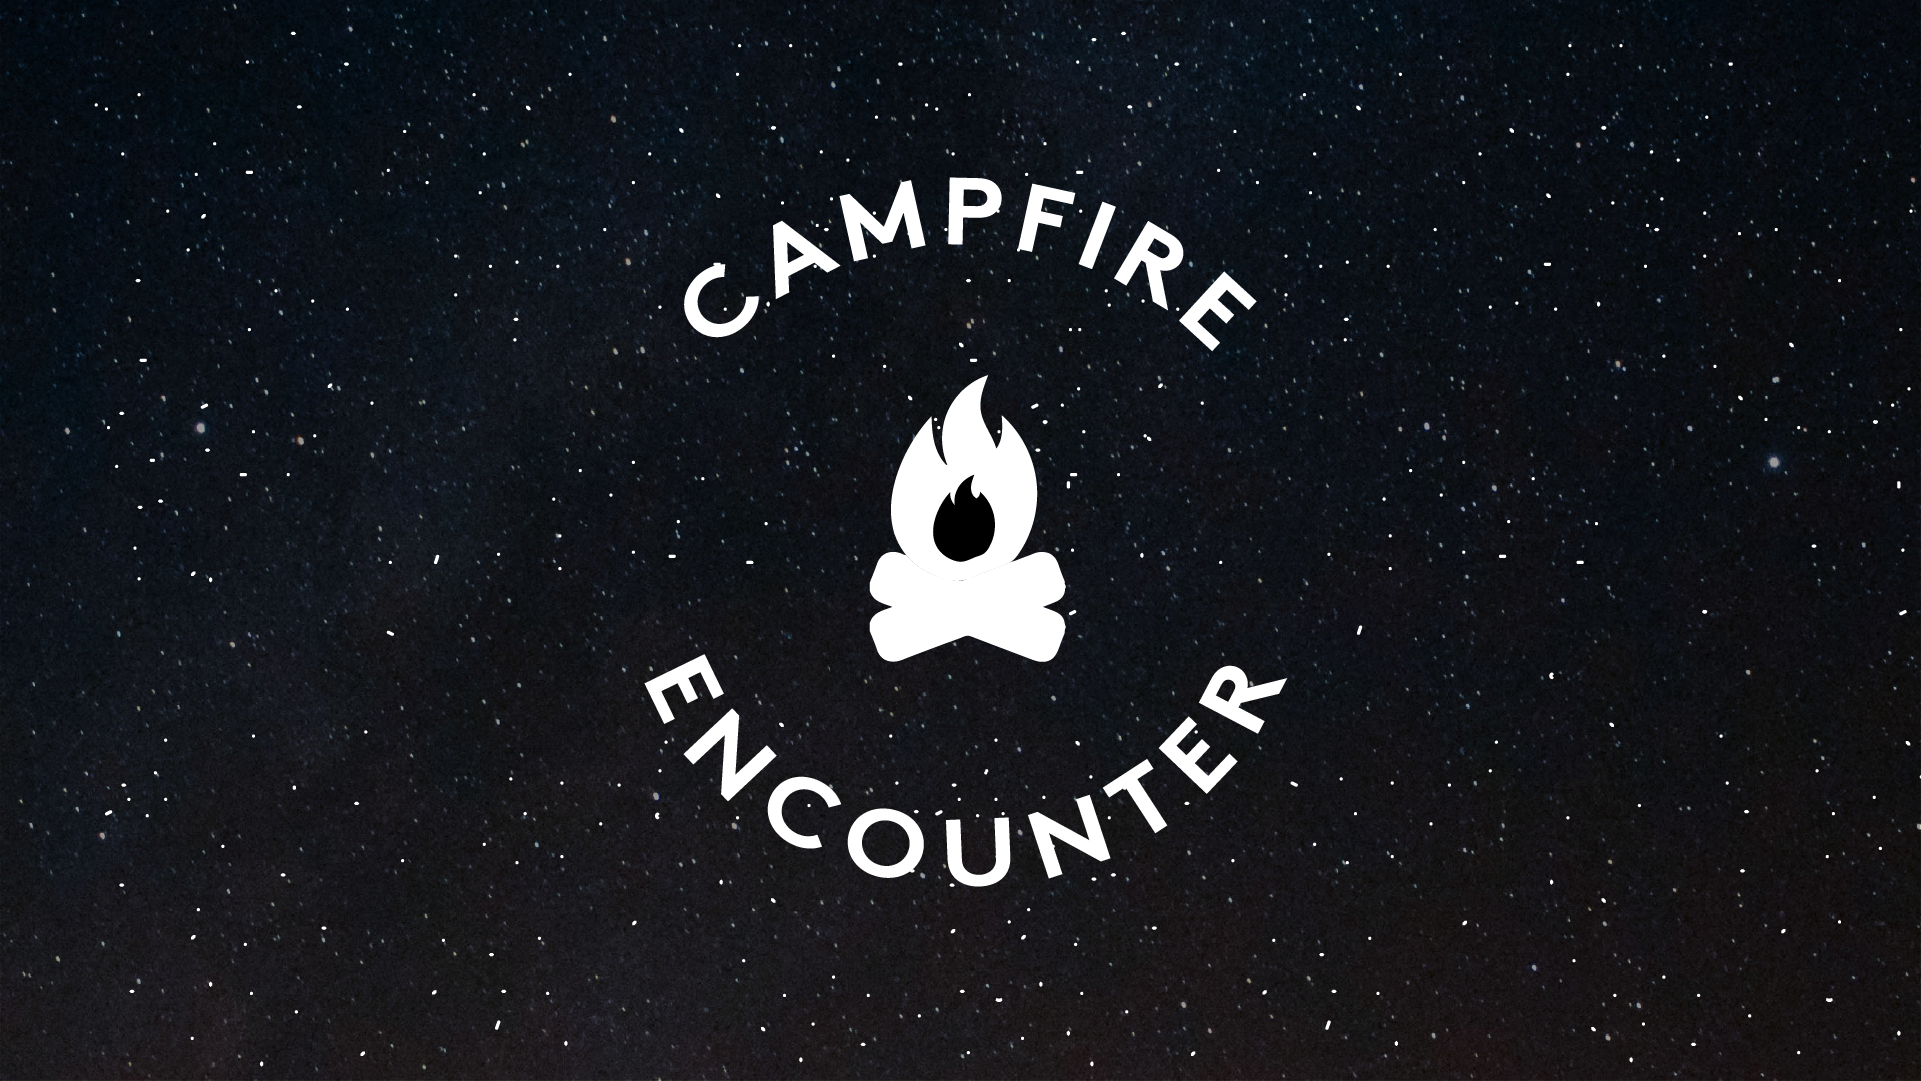 Campfire Encounter